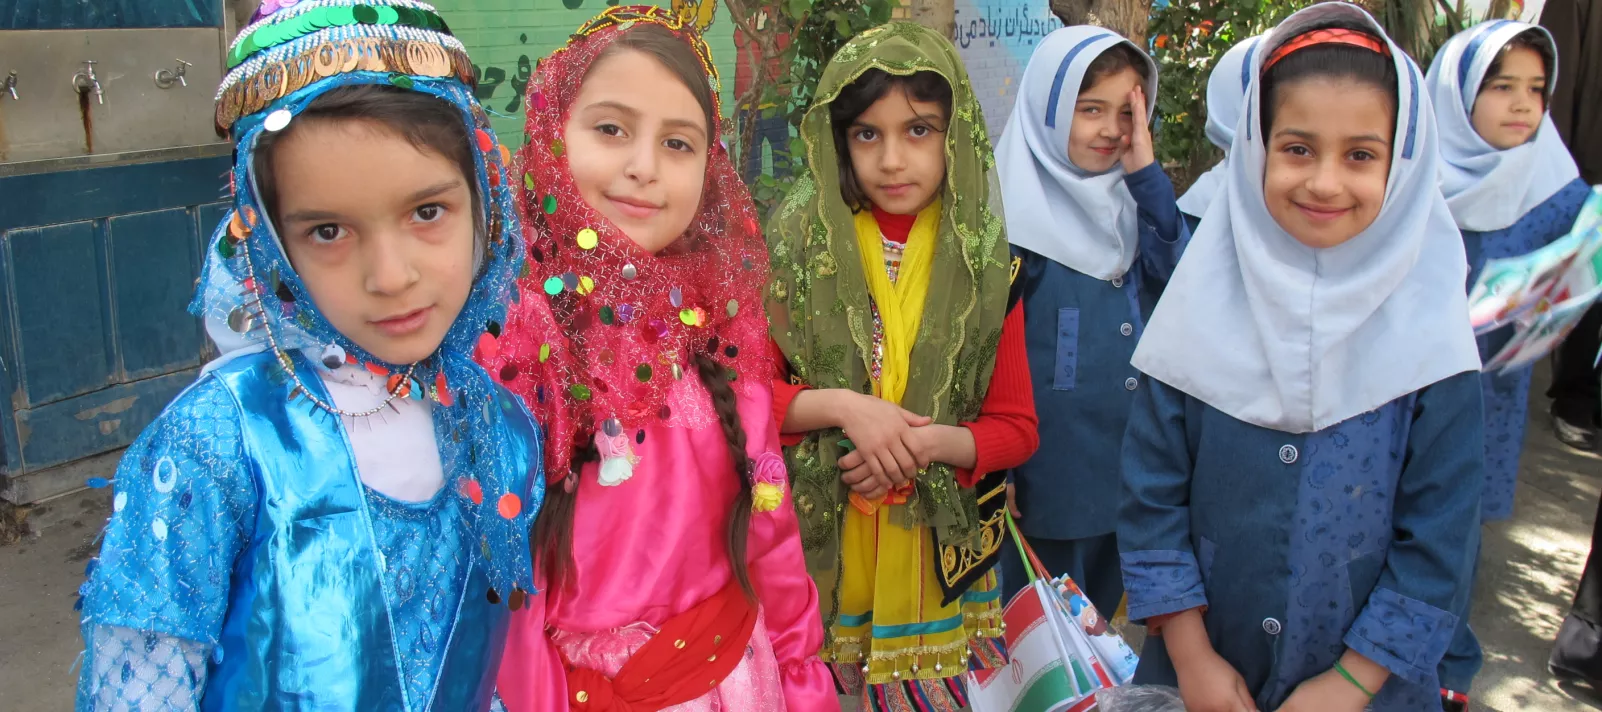 education for children in iran